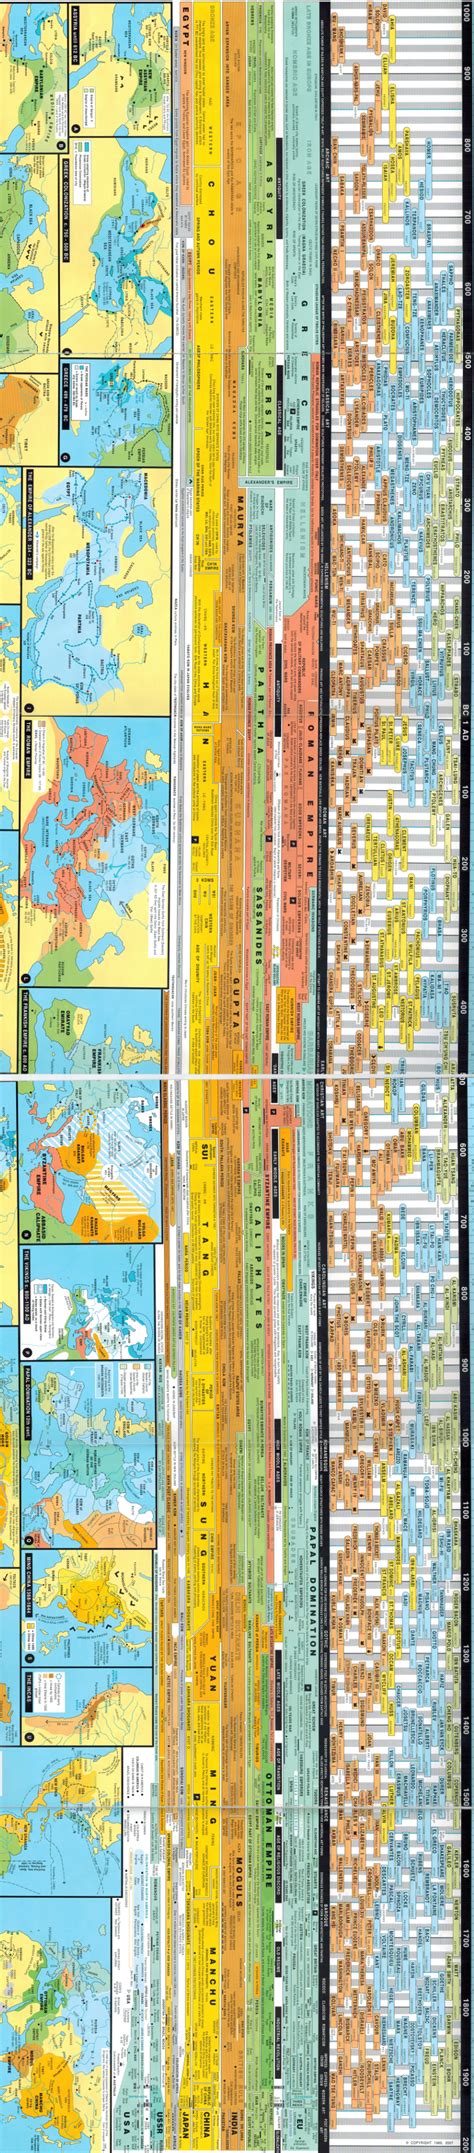 The Wall Chart Of World History By Edward Hull Histor